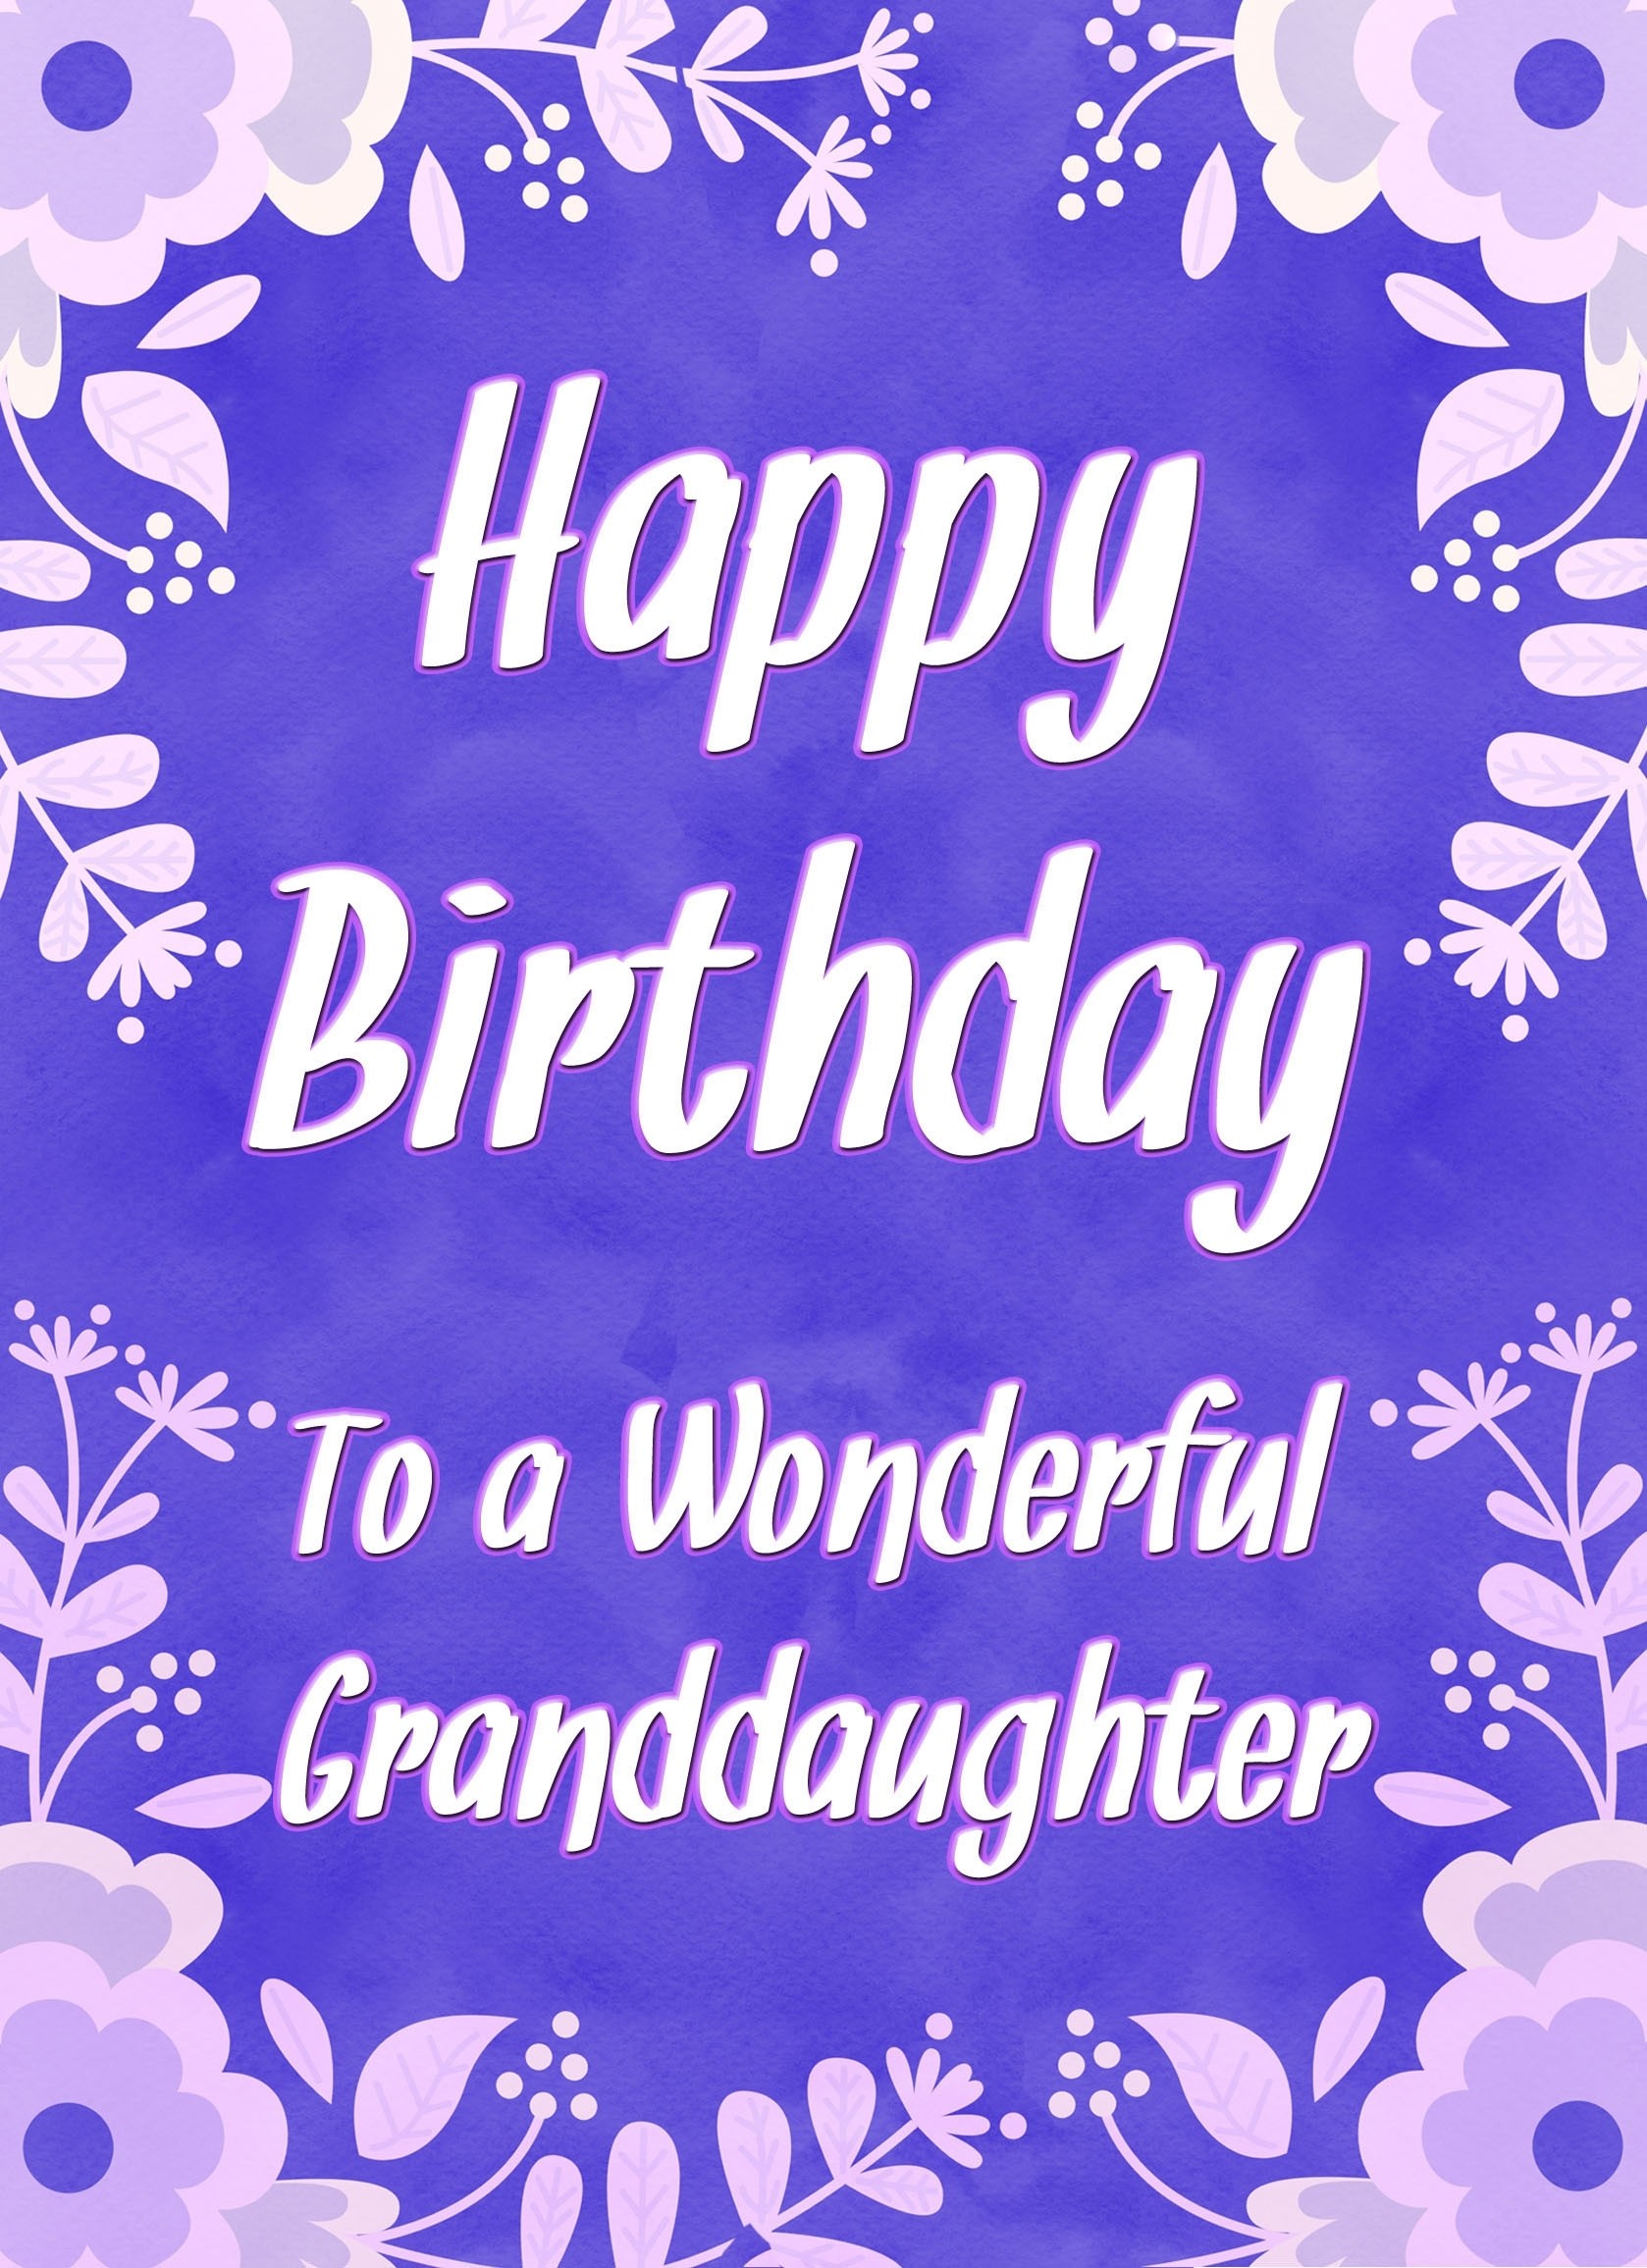 Birthday Card For Wonderful Granddaughter (Purple Border)